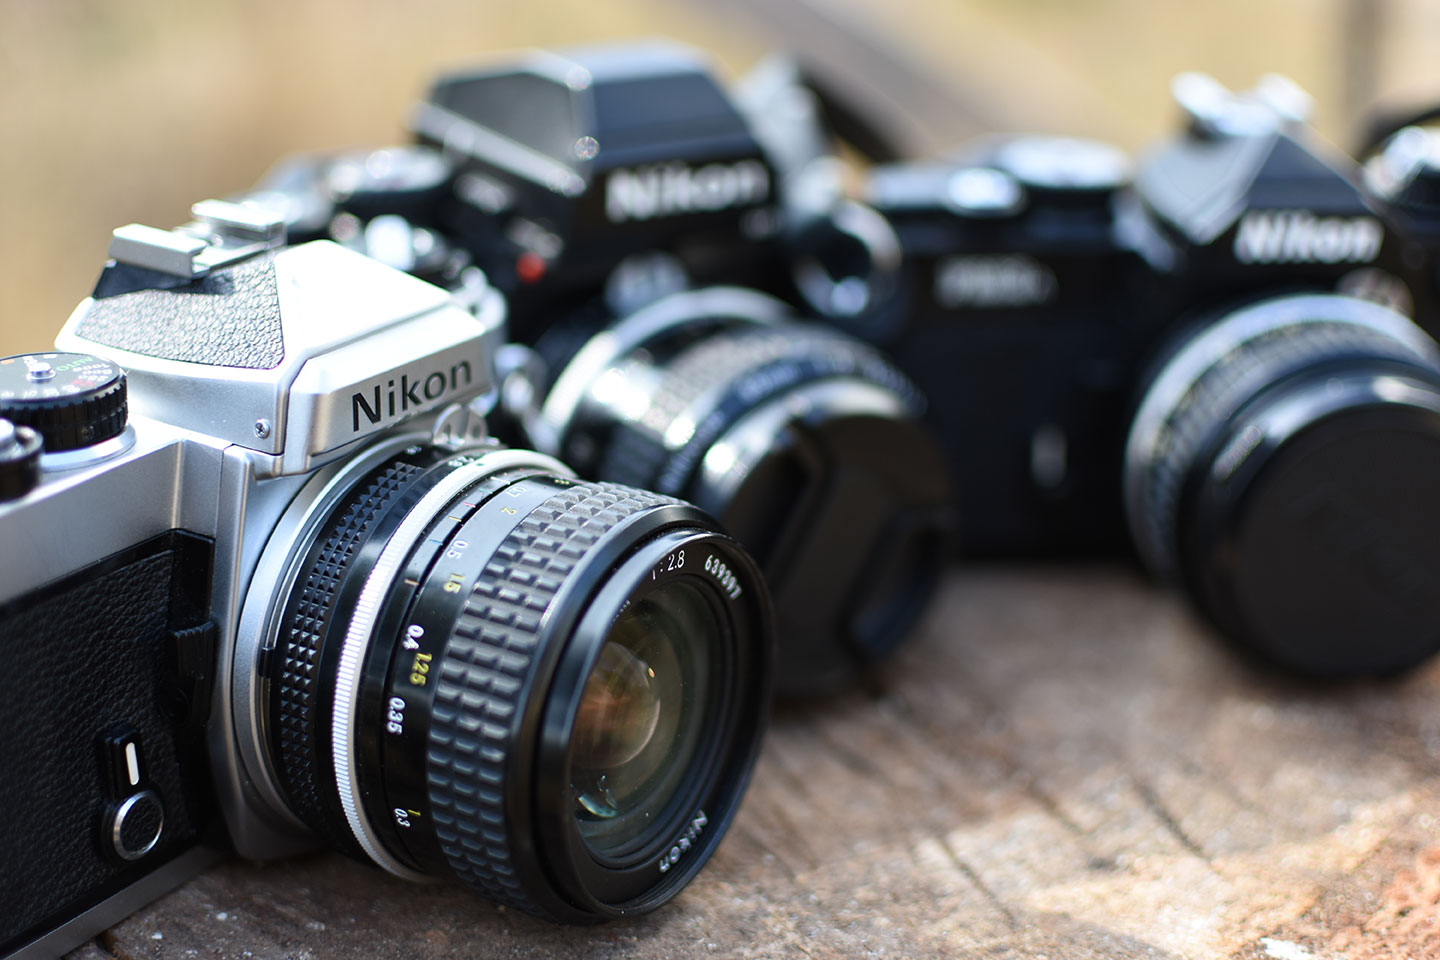 The Nikon FE, Nikon F3HP, and Nikon FM3A film cameras